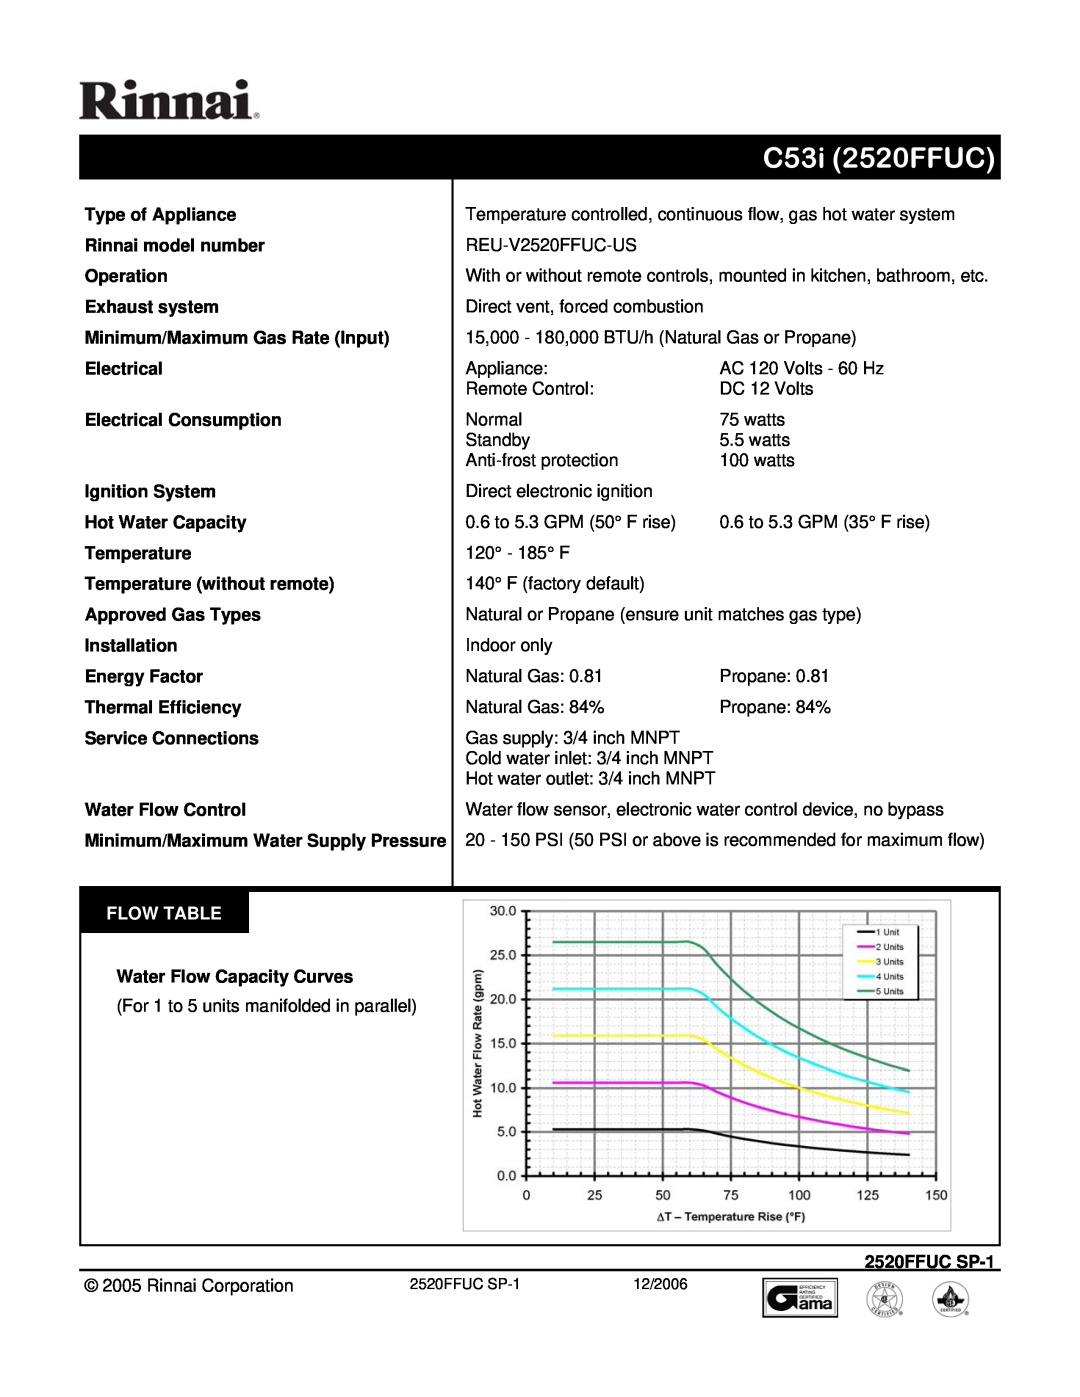 Rinnai REU-V2520FFUC-US manual C53i 2520FFUC, Flow Table 